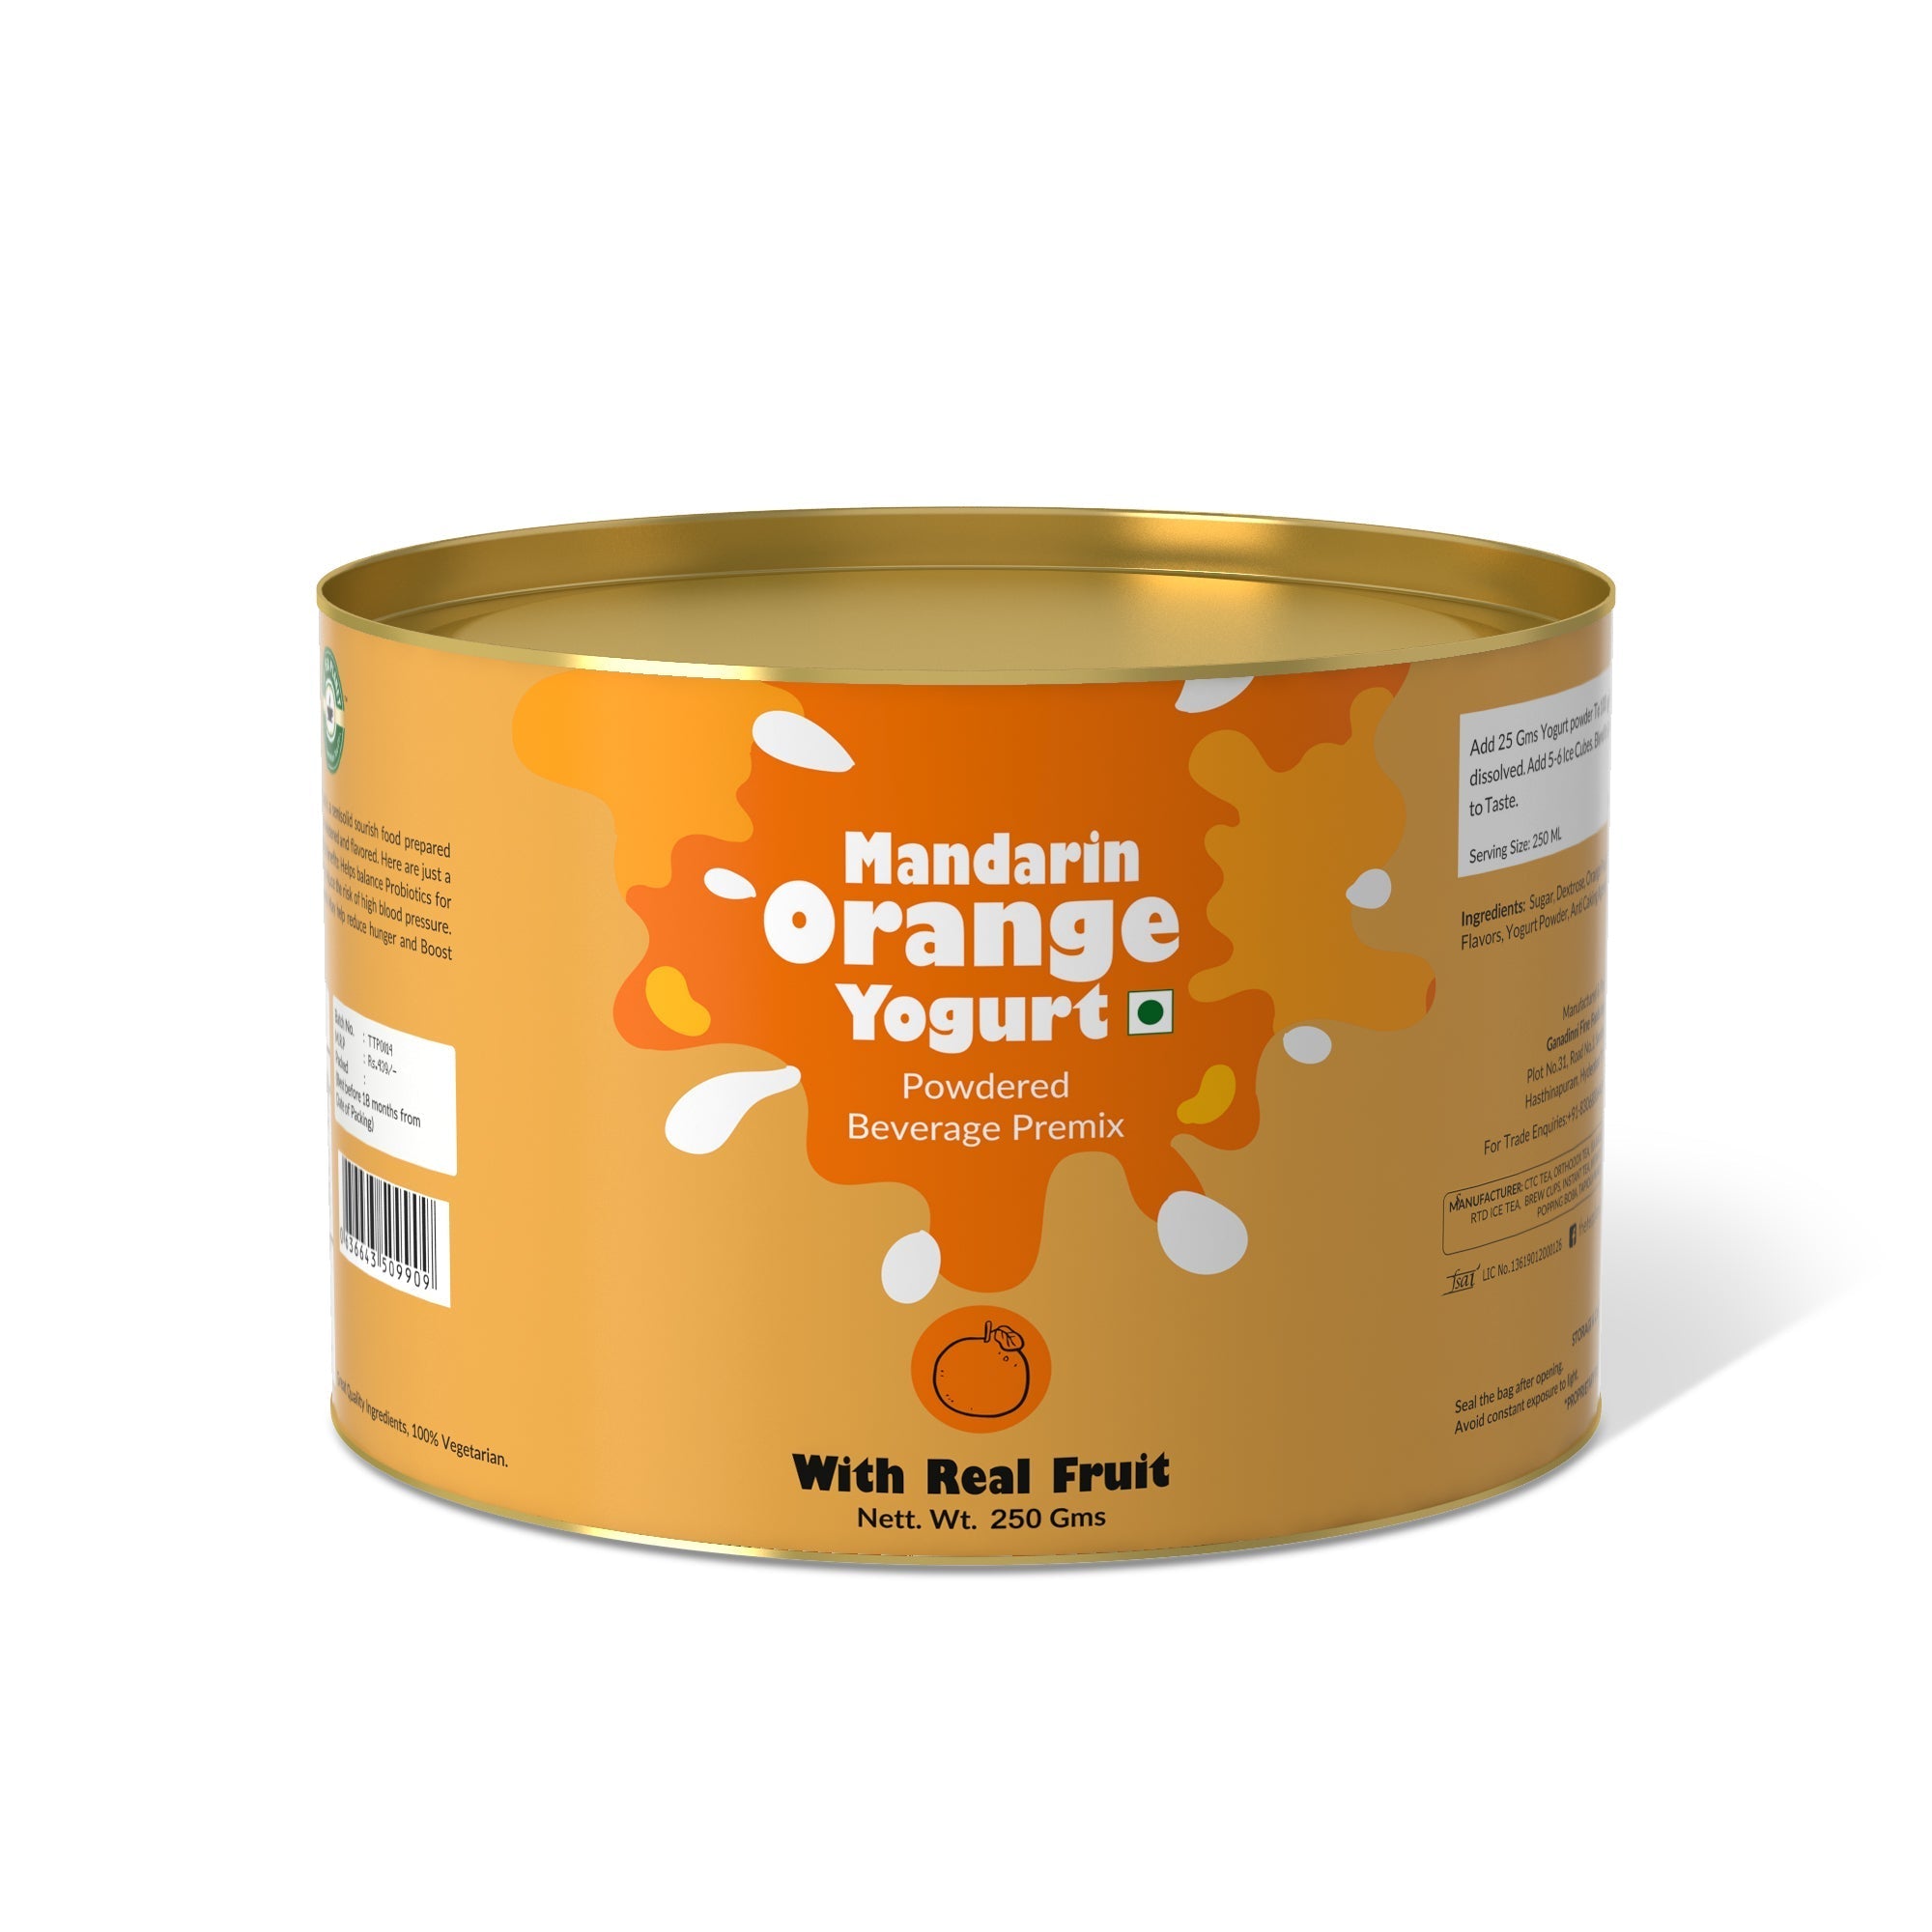 Mandarin Orange Yogurt Mix - 400 gms